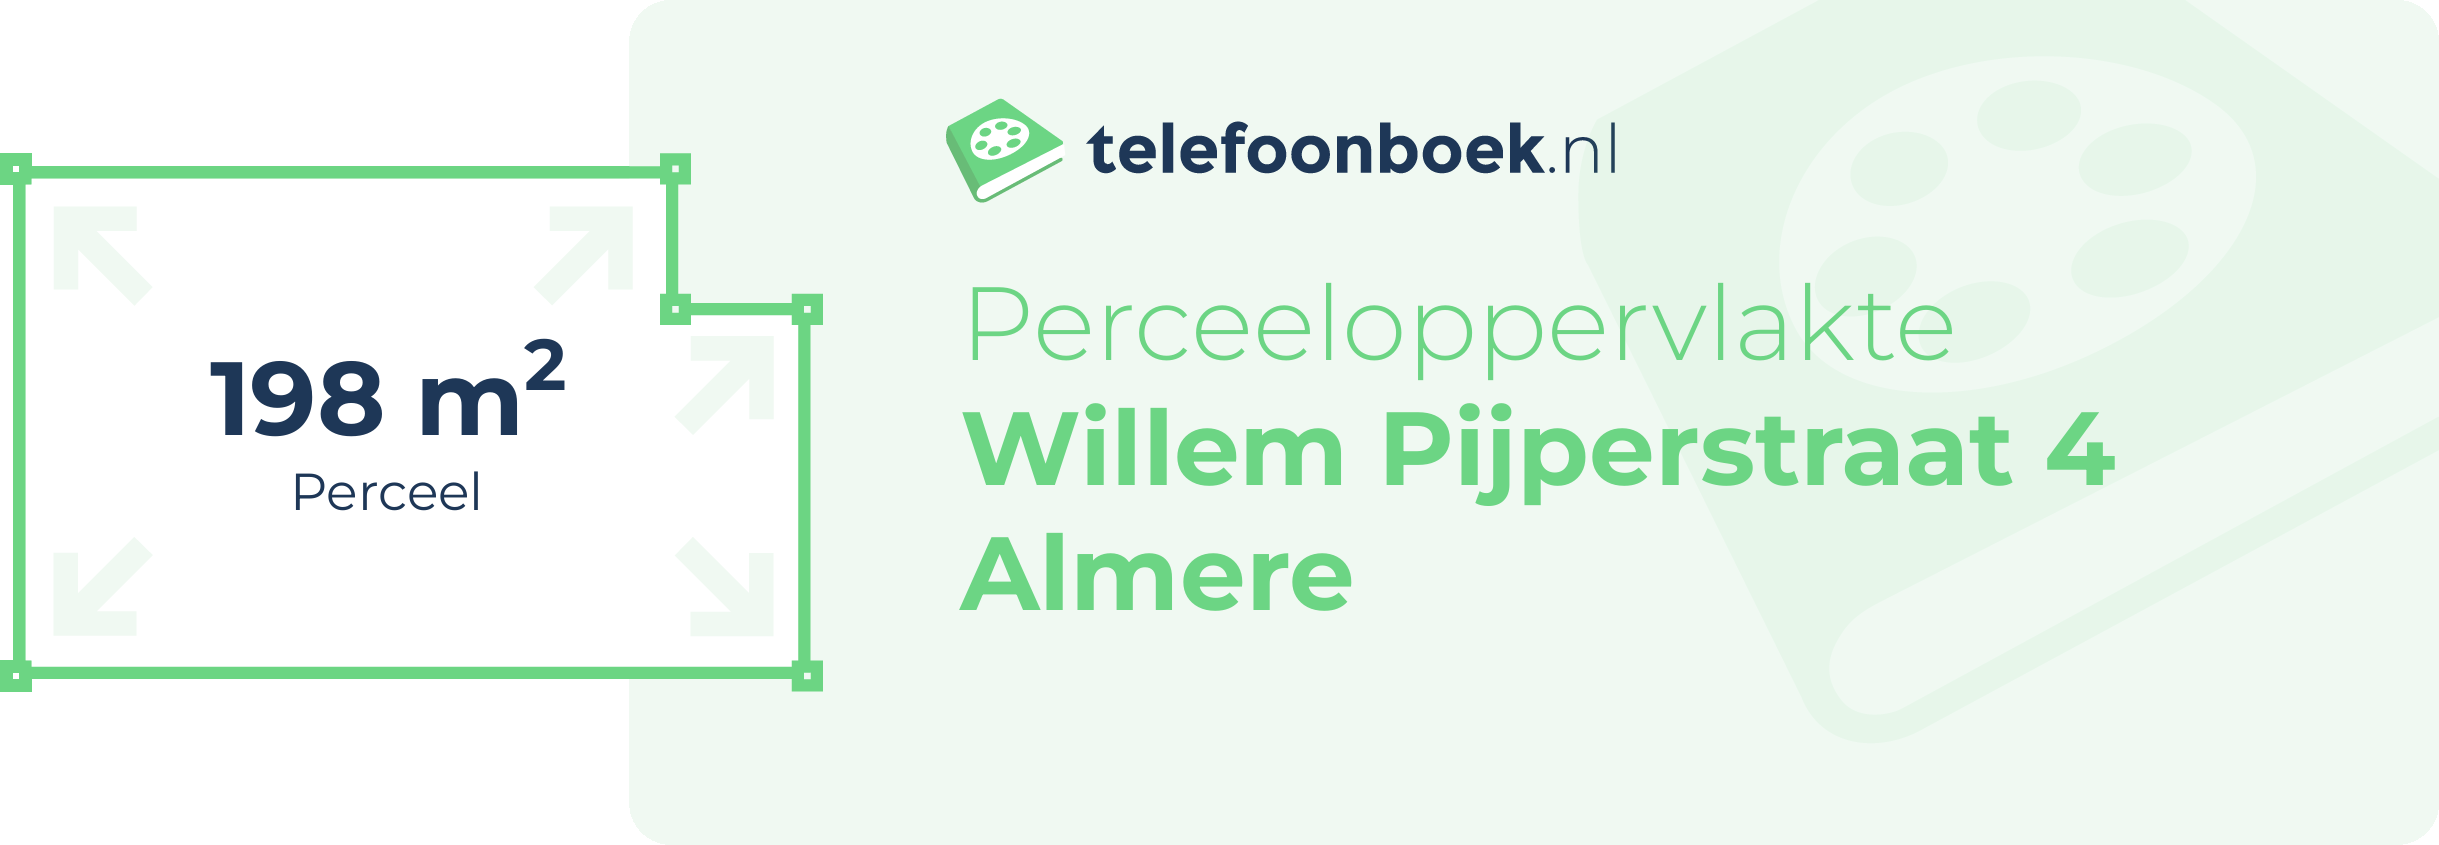 Perceeloppervlakte Willem Pijperstraat 4 Almere